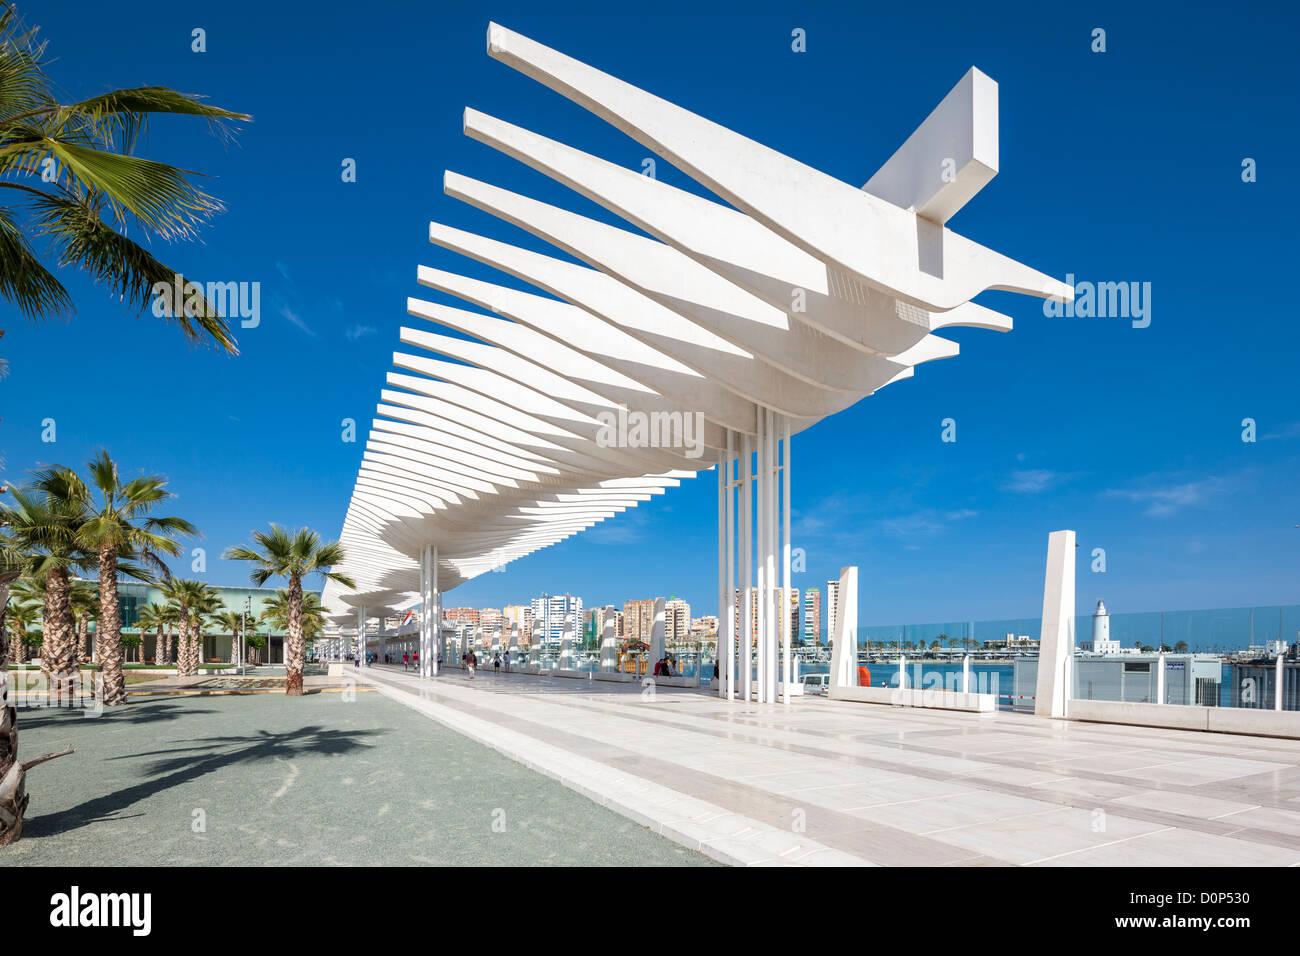 Malaga Spanien modernen neuen cruise terminal. Seehafen Hafen Harbour Boulevard promenade El Palmeral de Las Sorpresas. Kai 2 Stockfoto